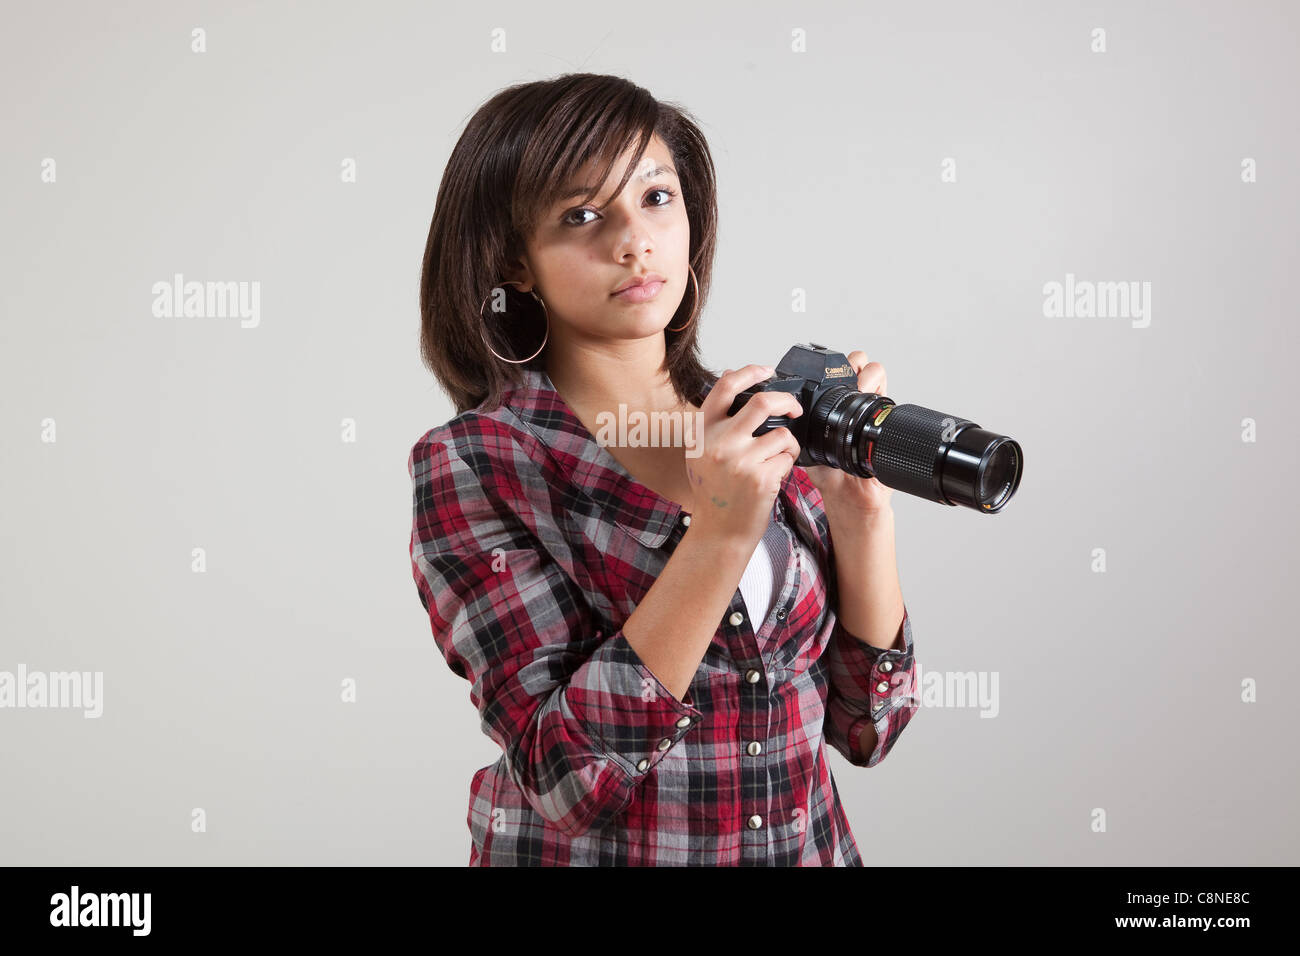 Mid school aged female student photographer. Stock Photo